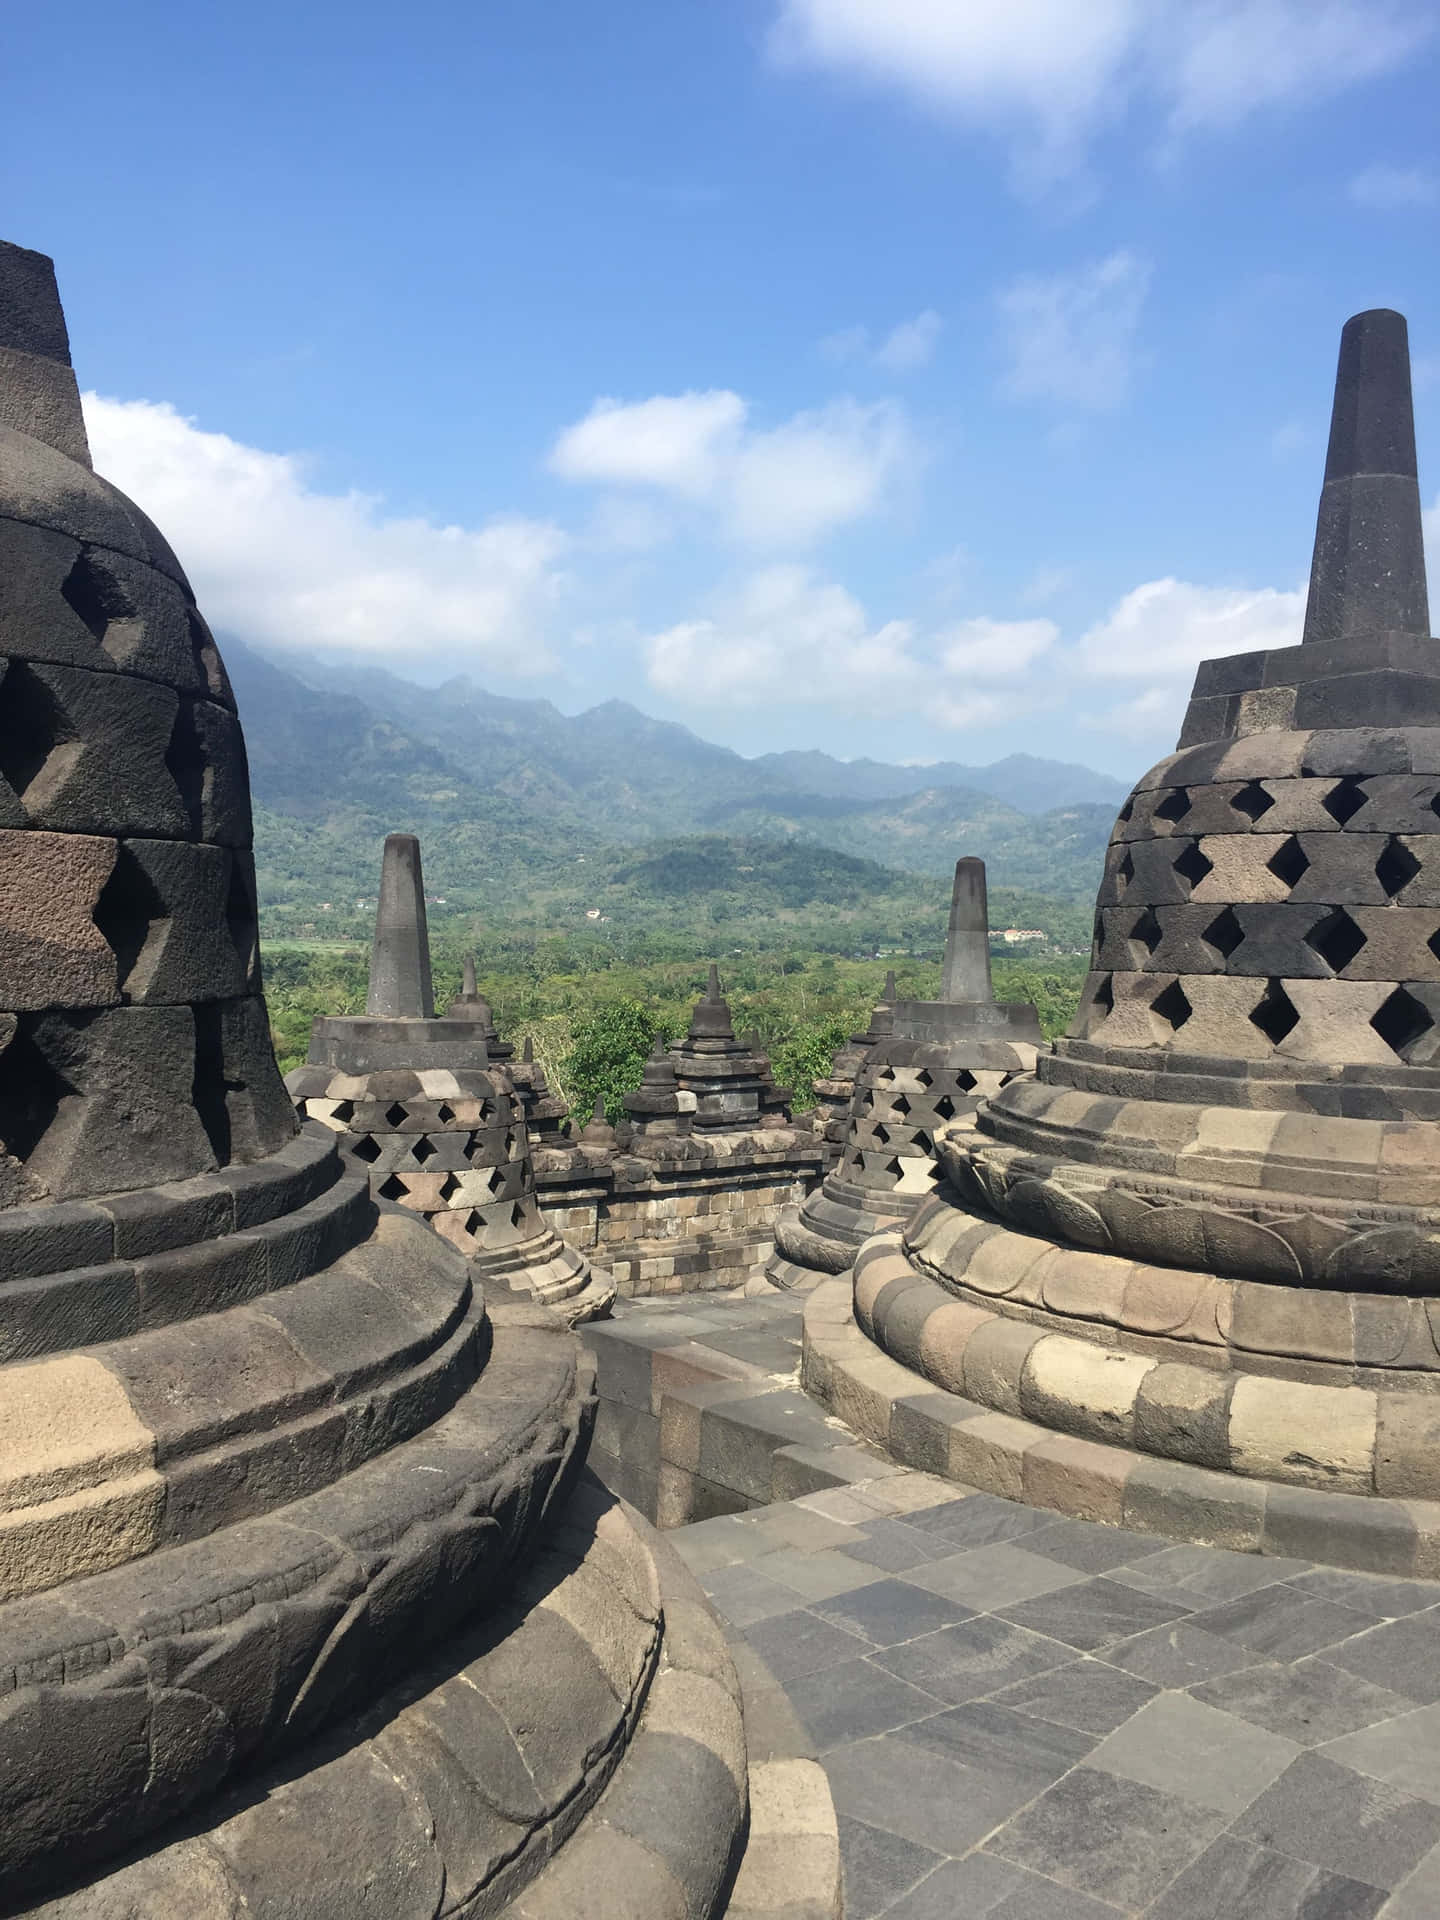 30k Borobudur Pictures  Download Free Images on Unsplash